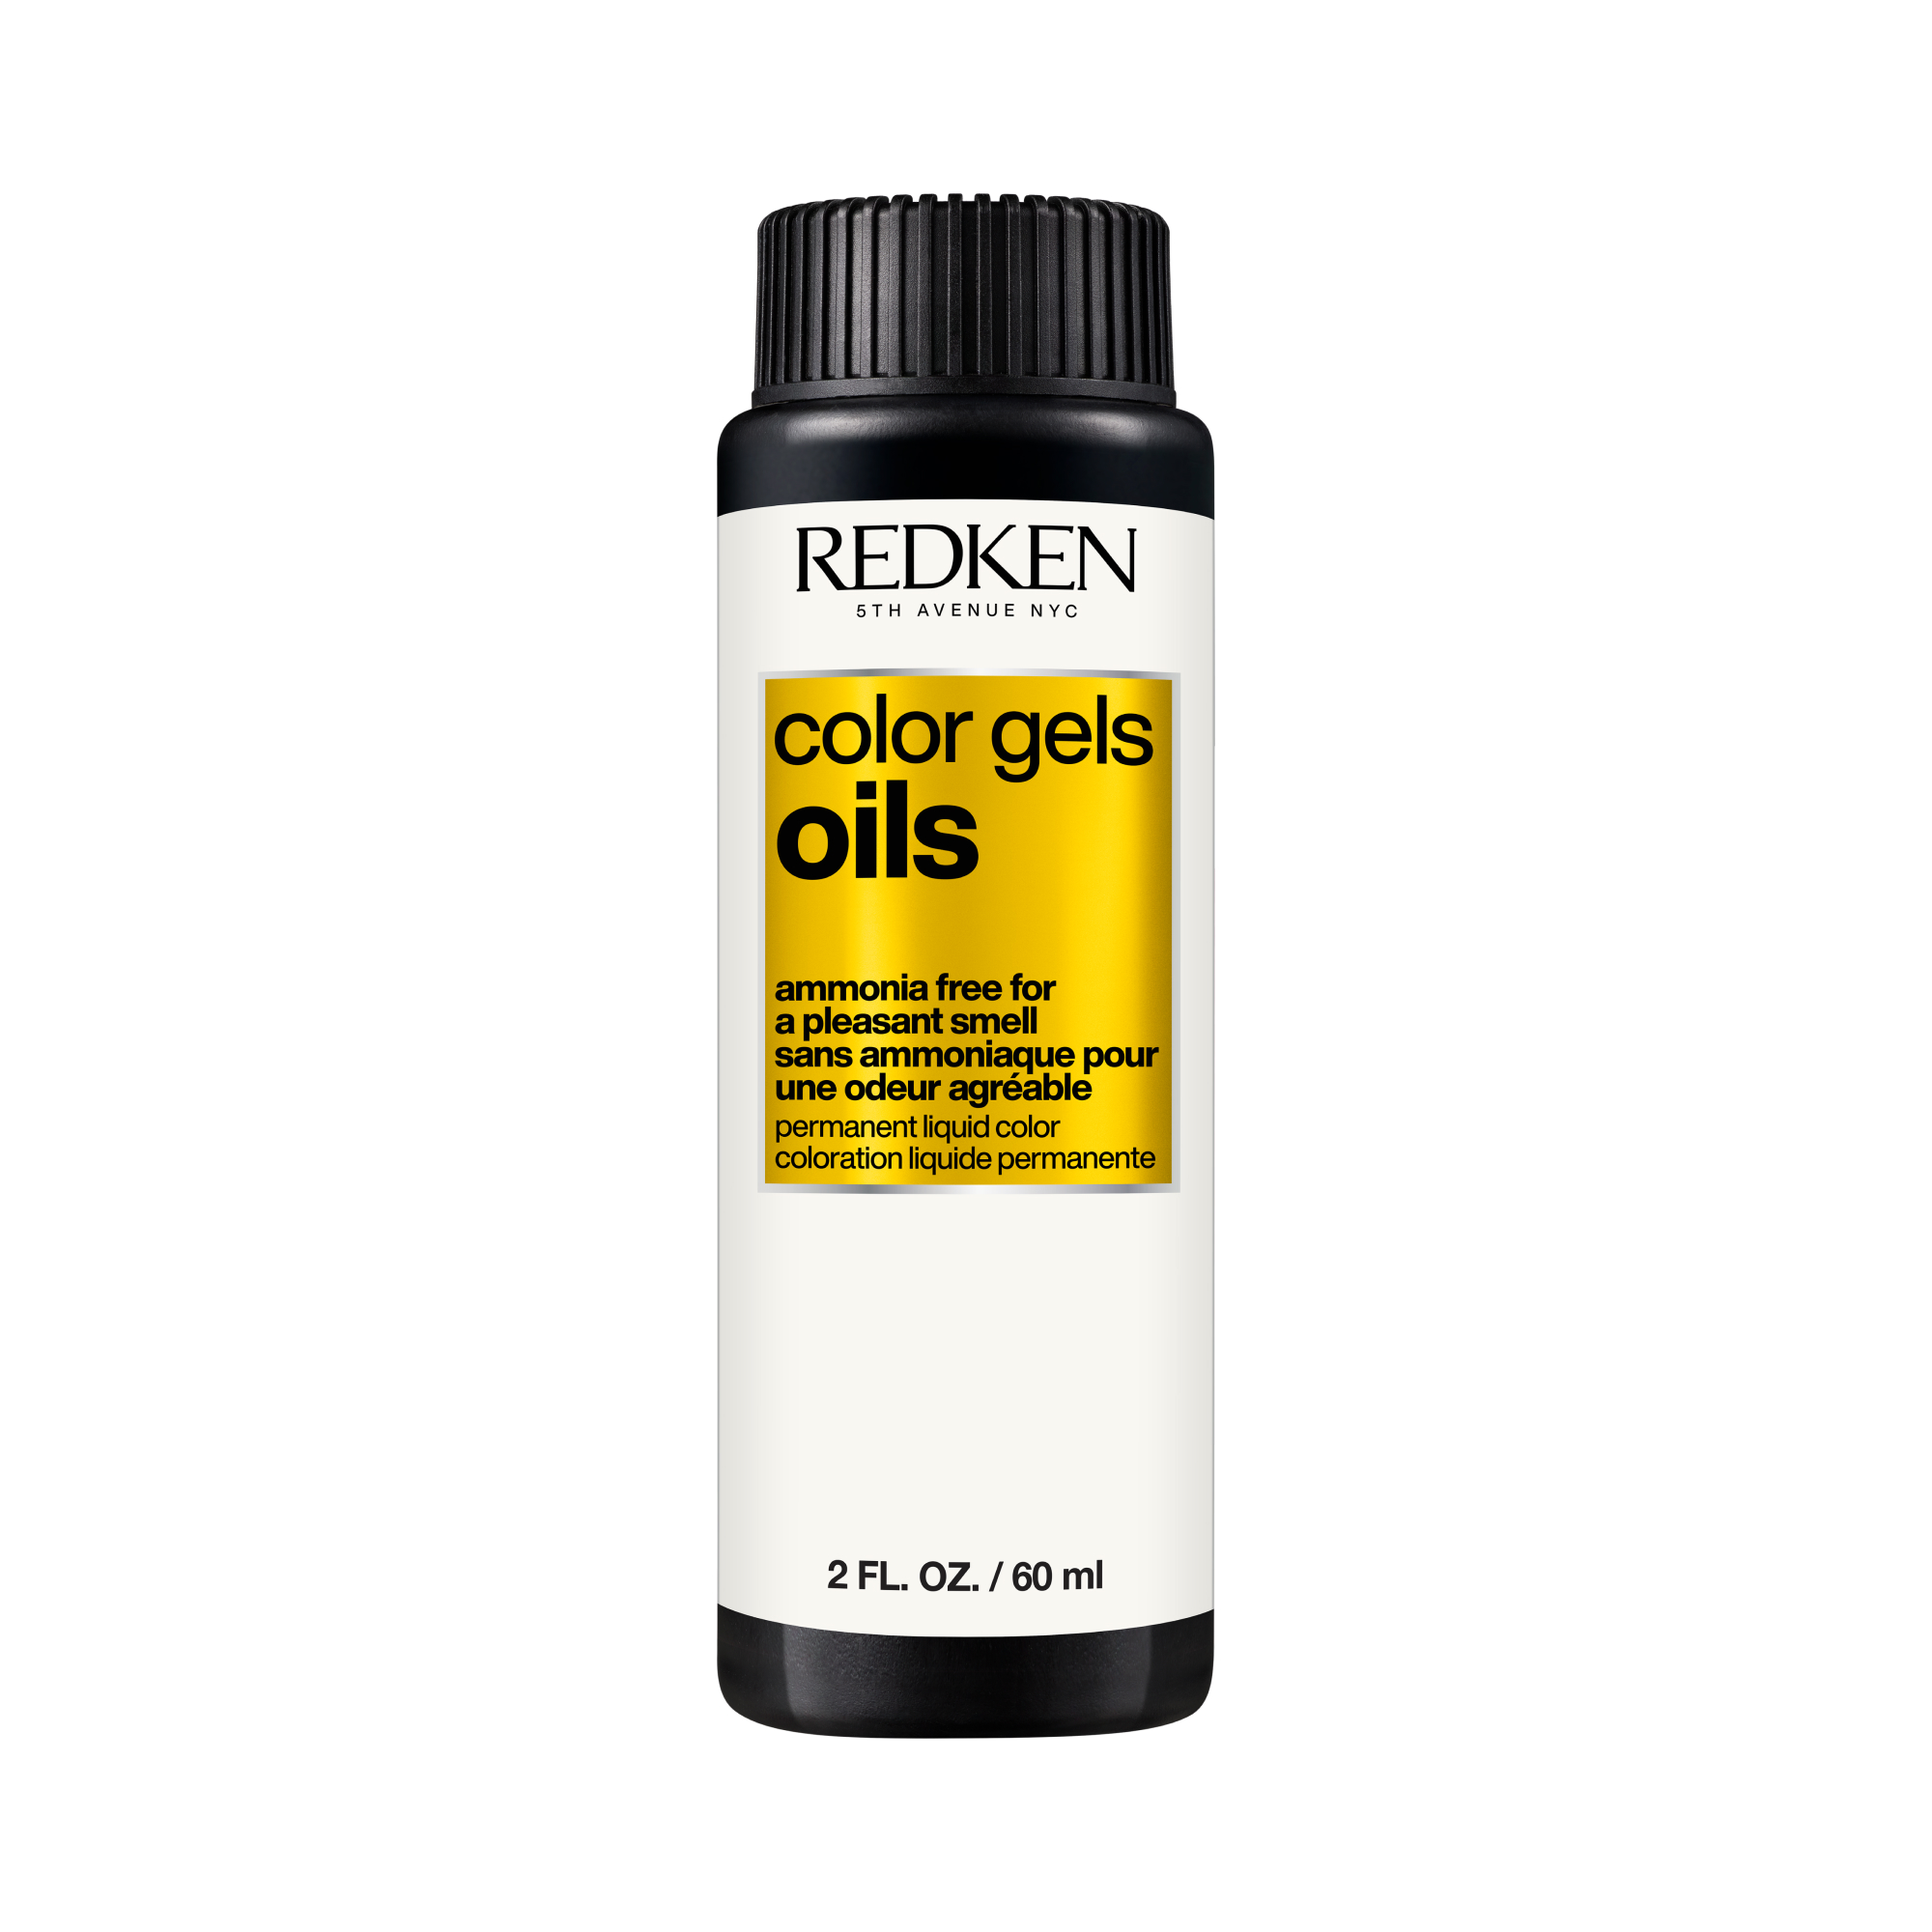 Redken Color Gels Oils permanente Haarfarbe in 48 Nuancen